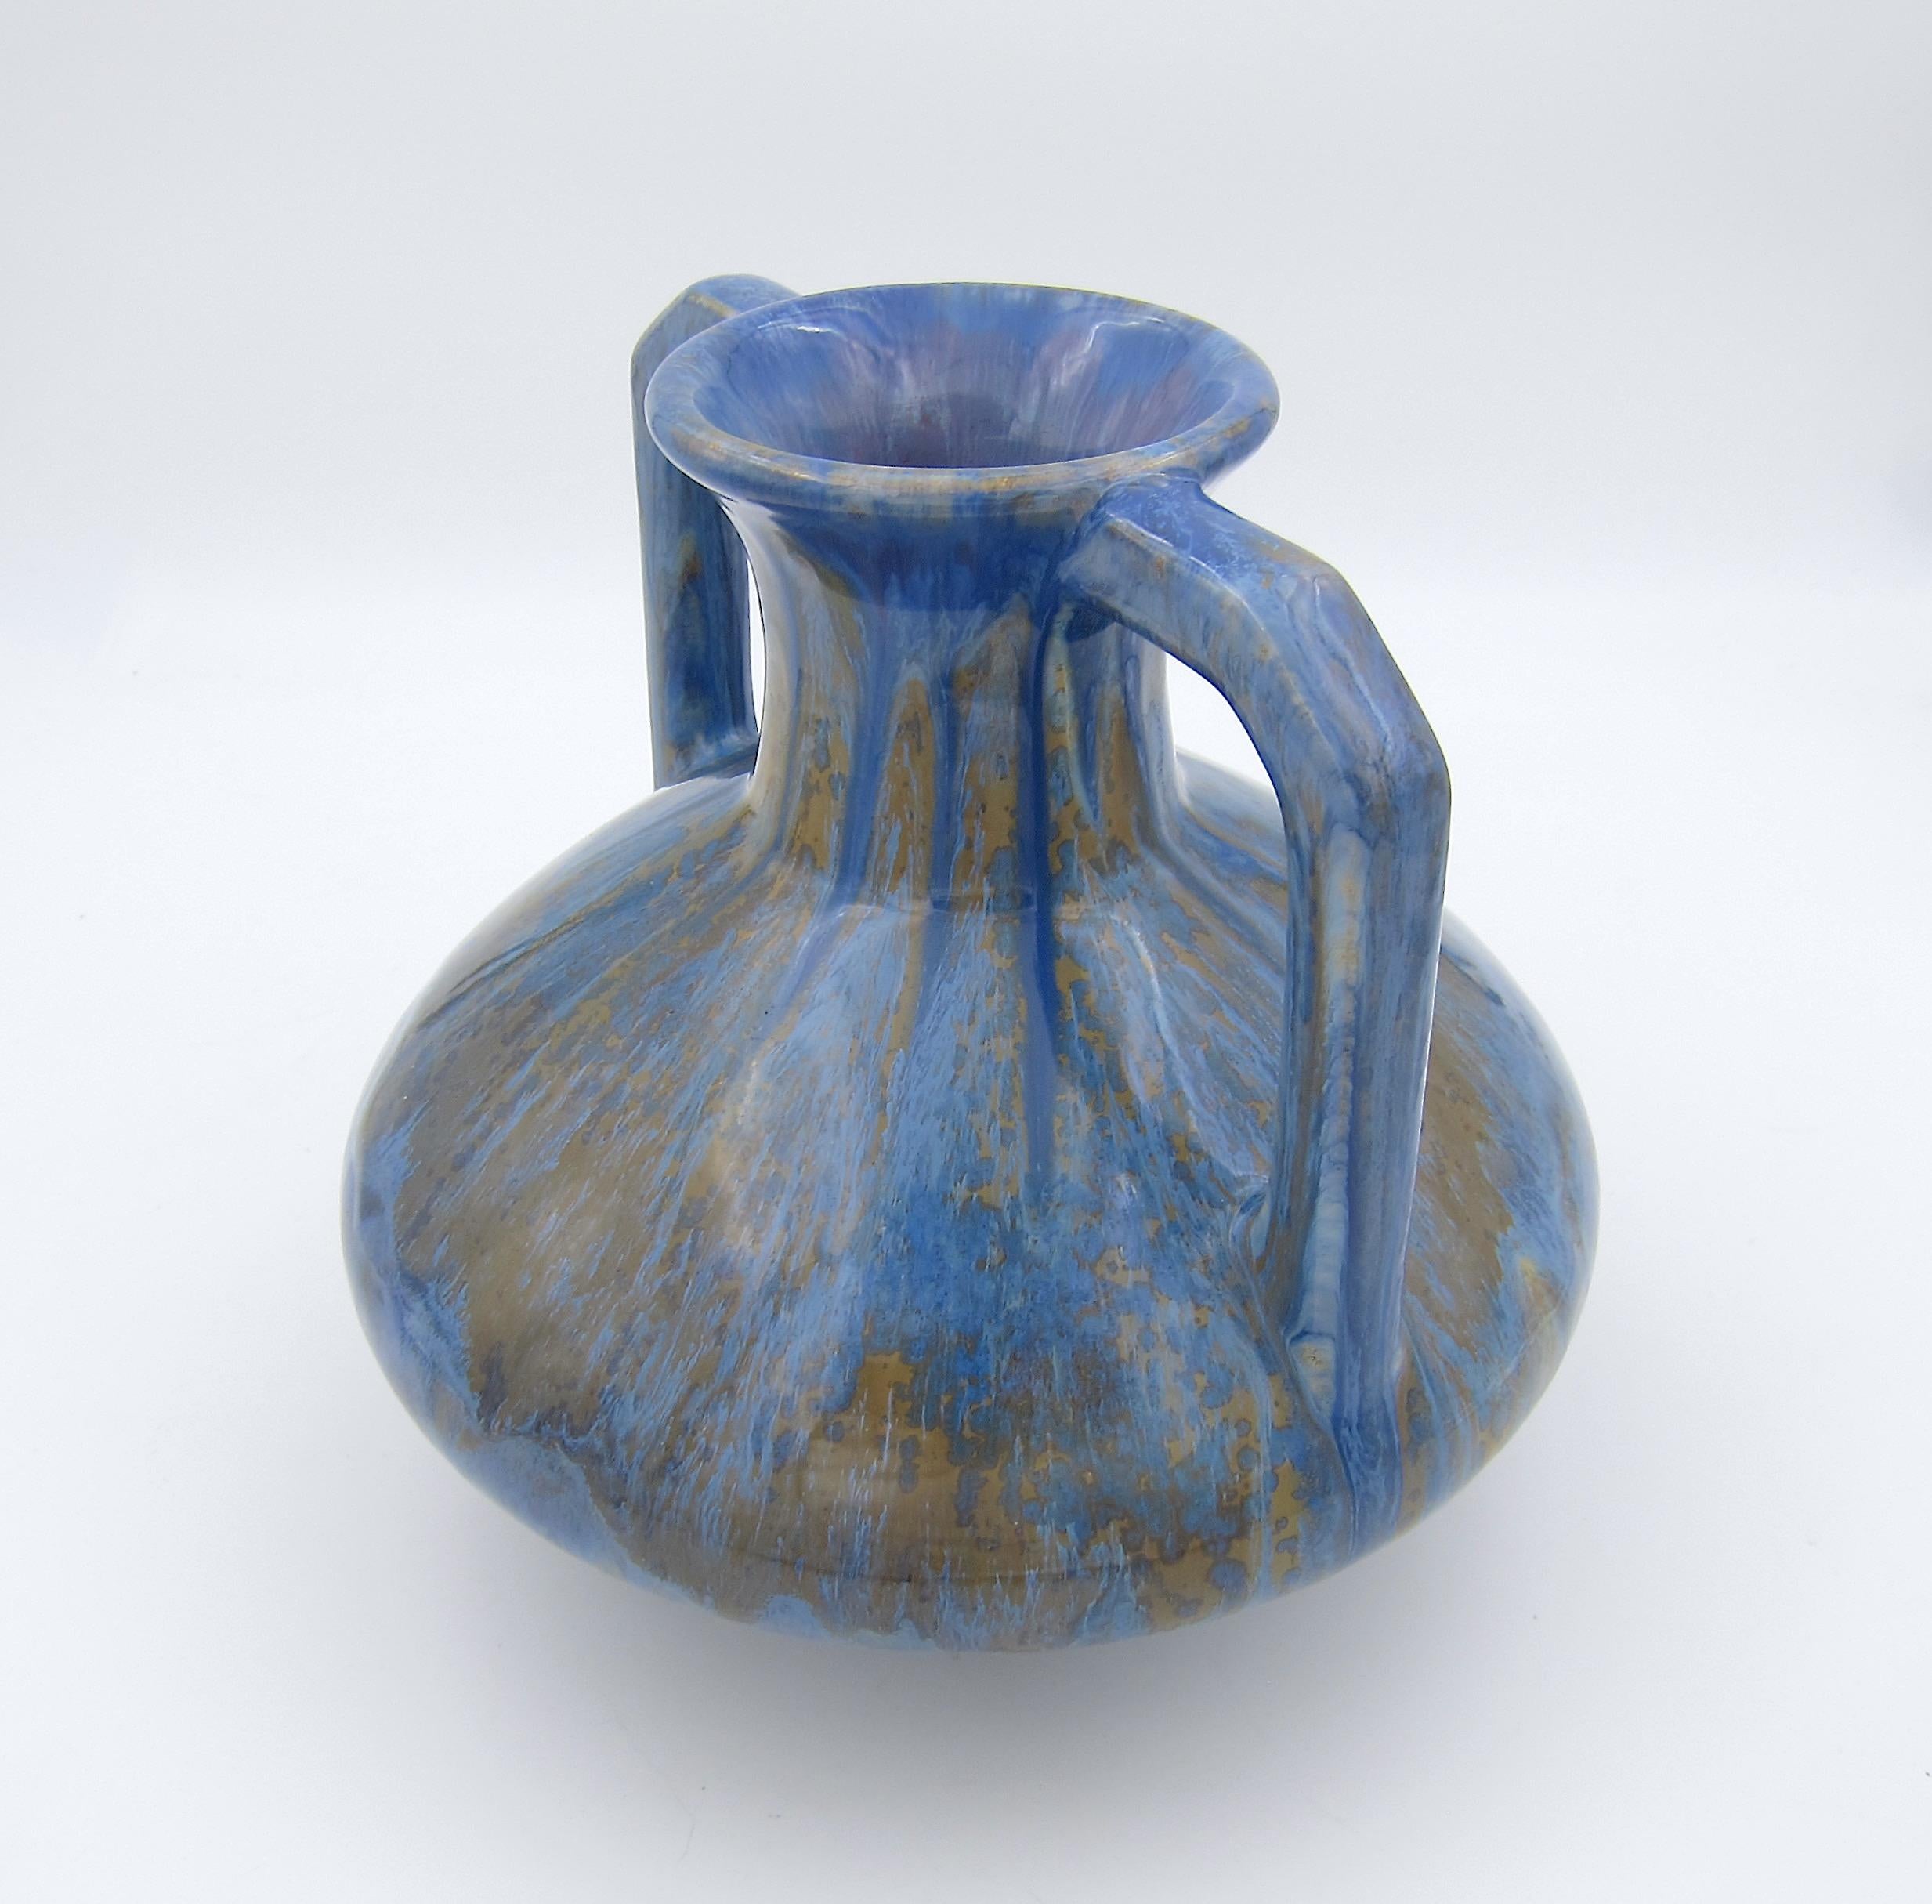 20th Century French Pierrefonds Vase with Blue Crystalline Glaze